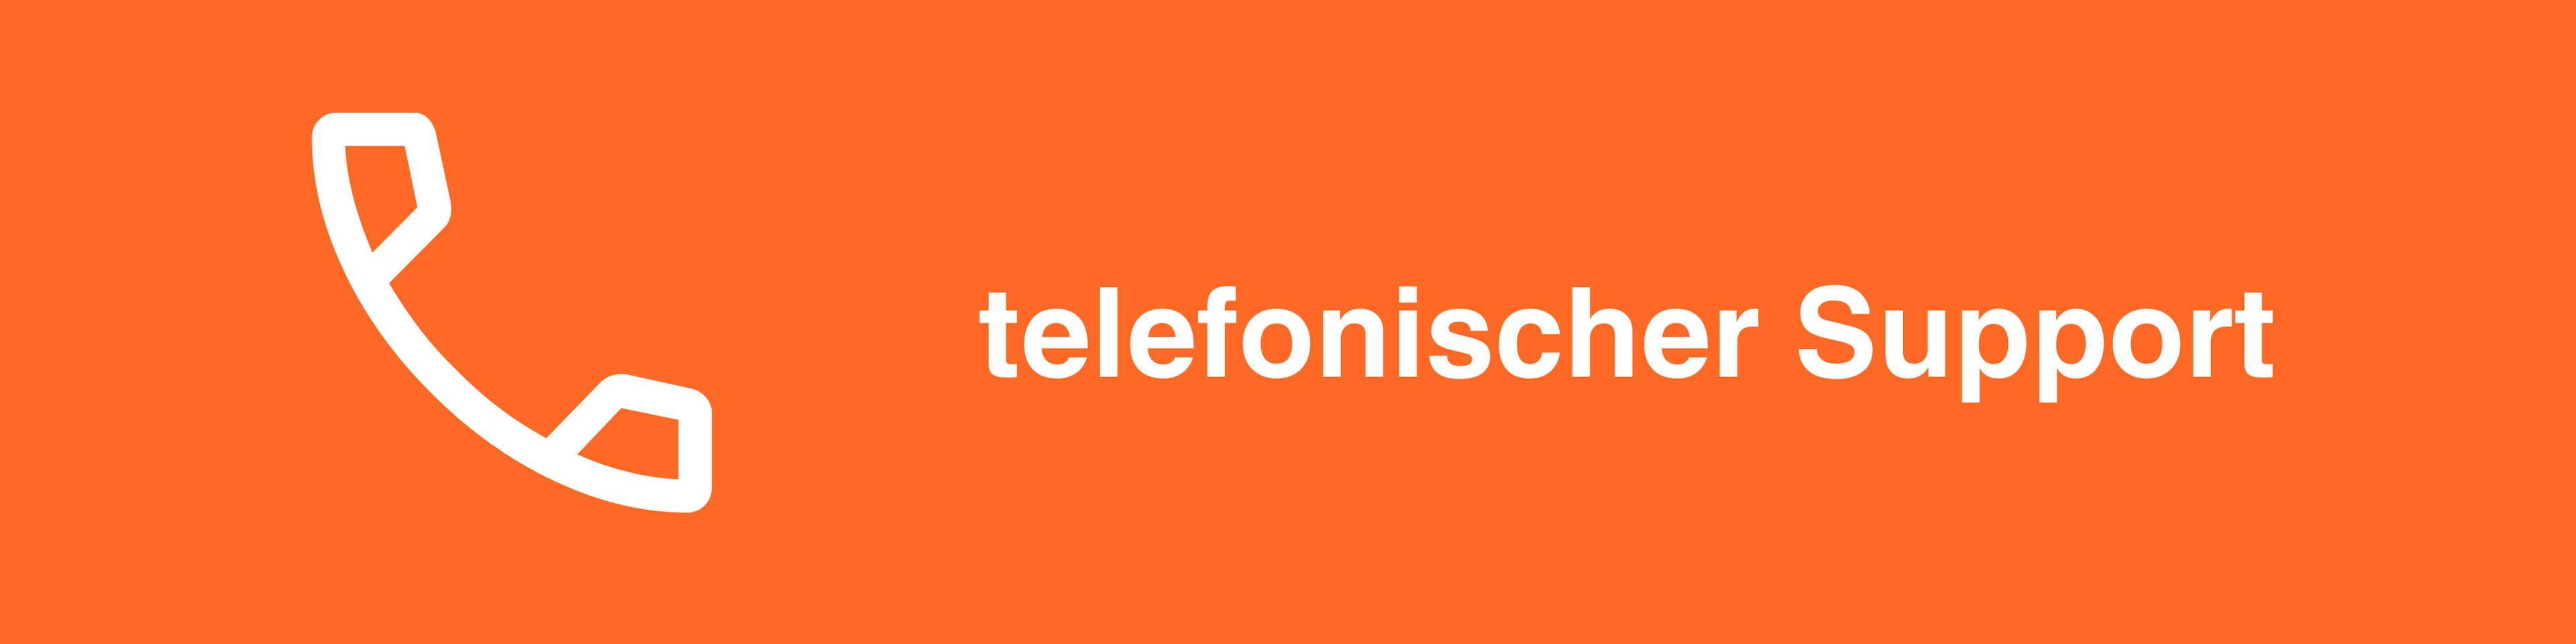 telefonischer_support_slide